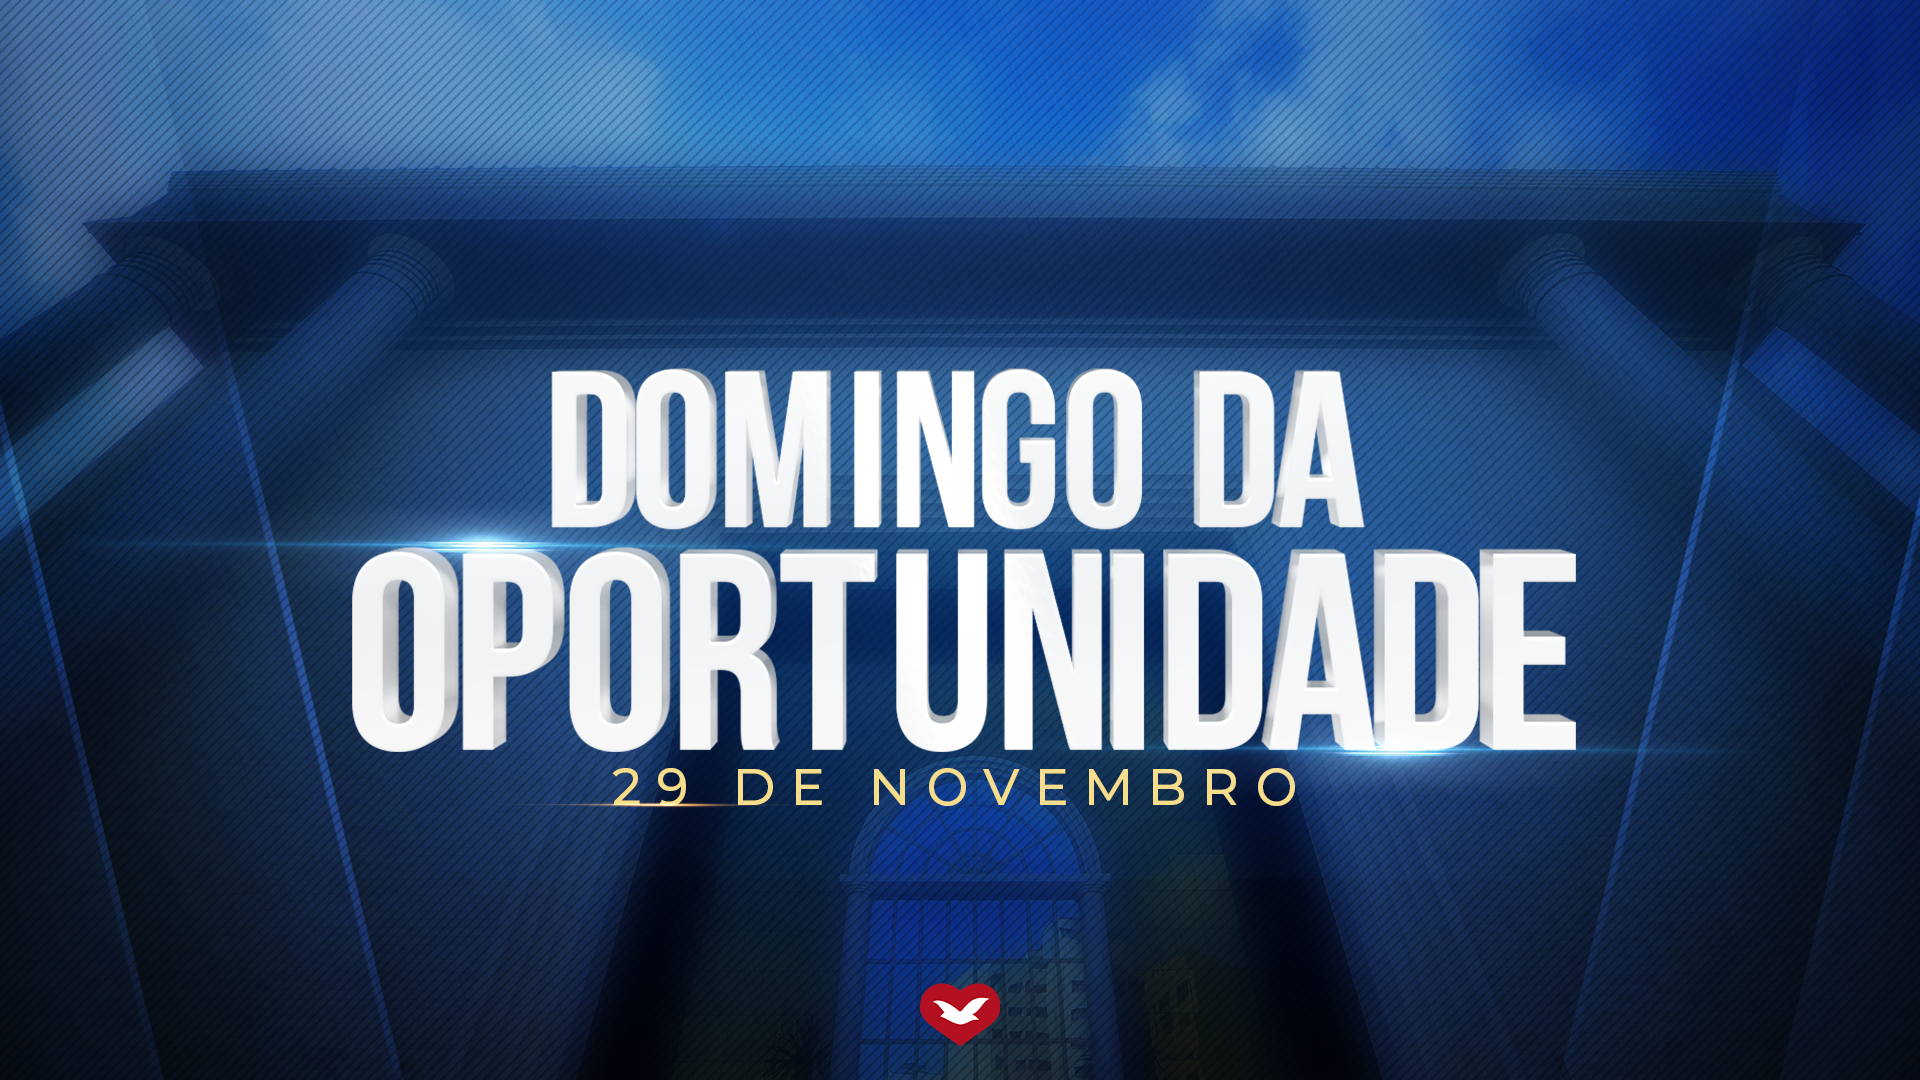 Dia 29 de novembro: o Domingo da Oportunidade